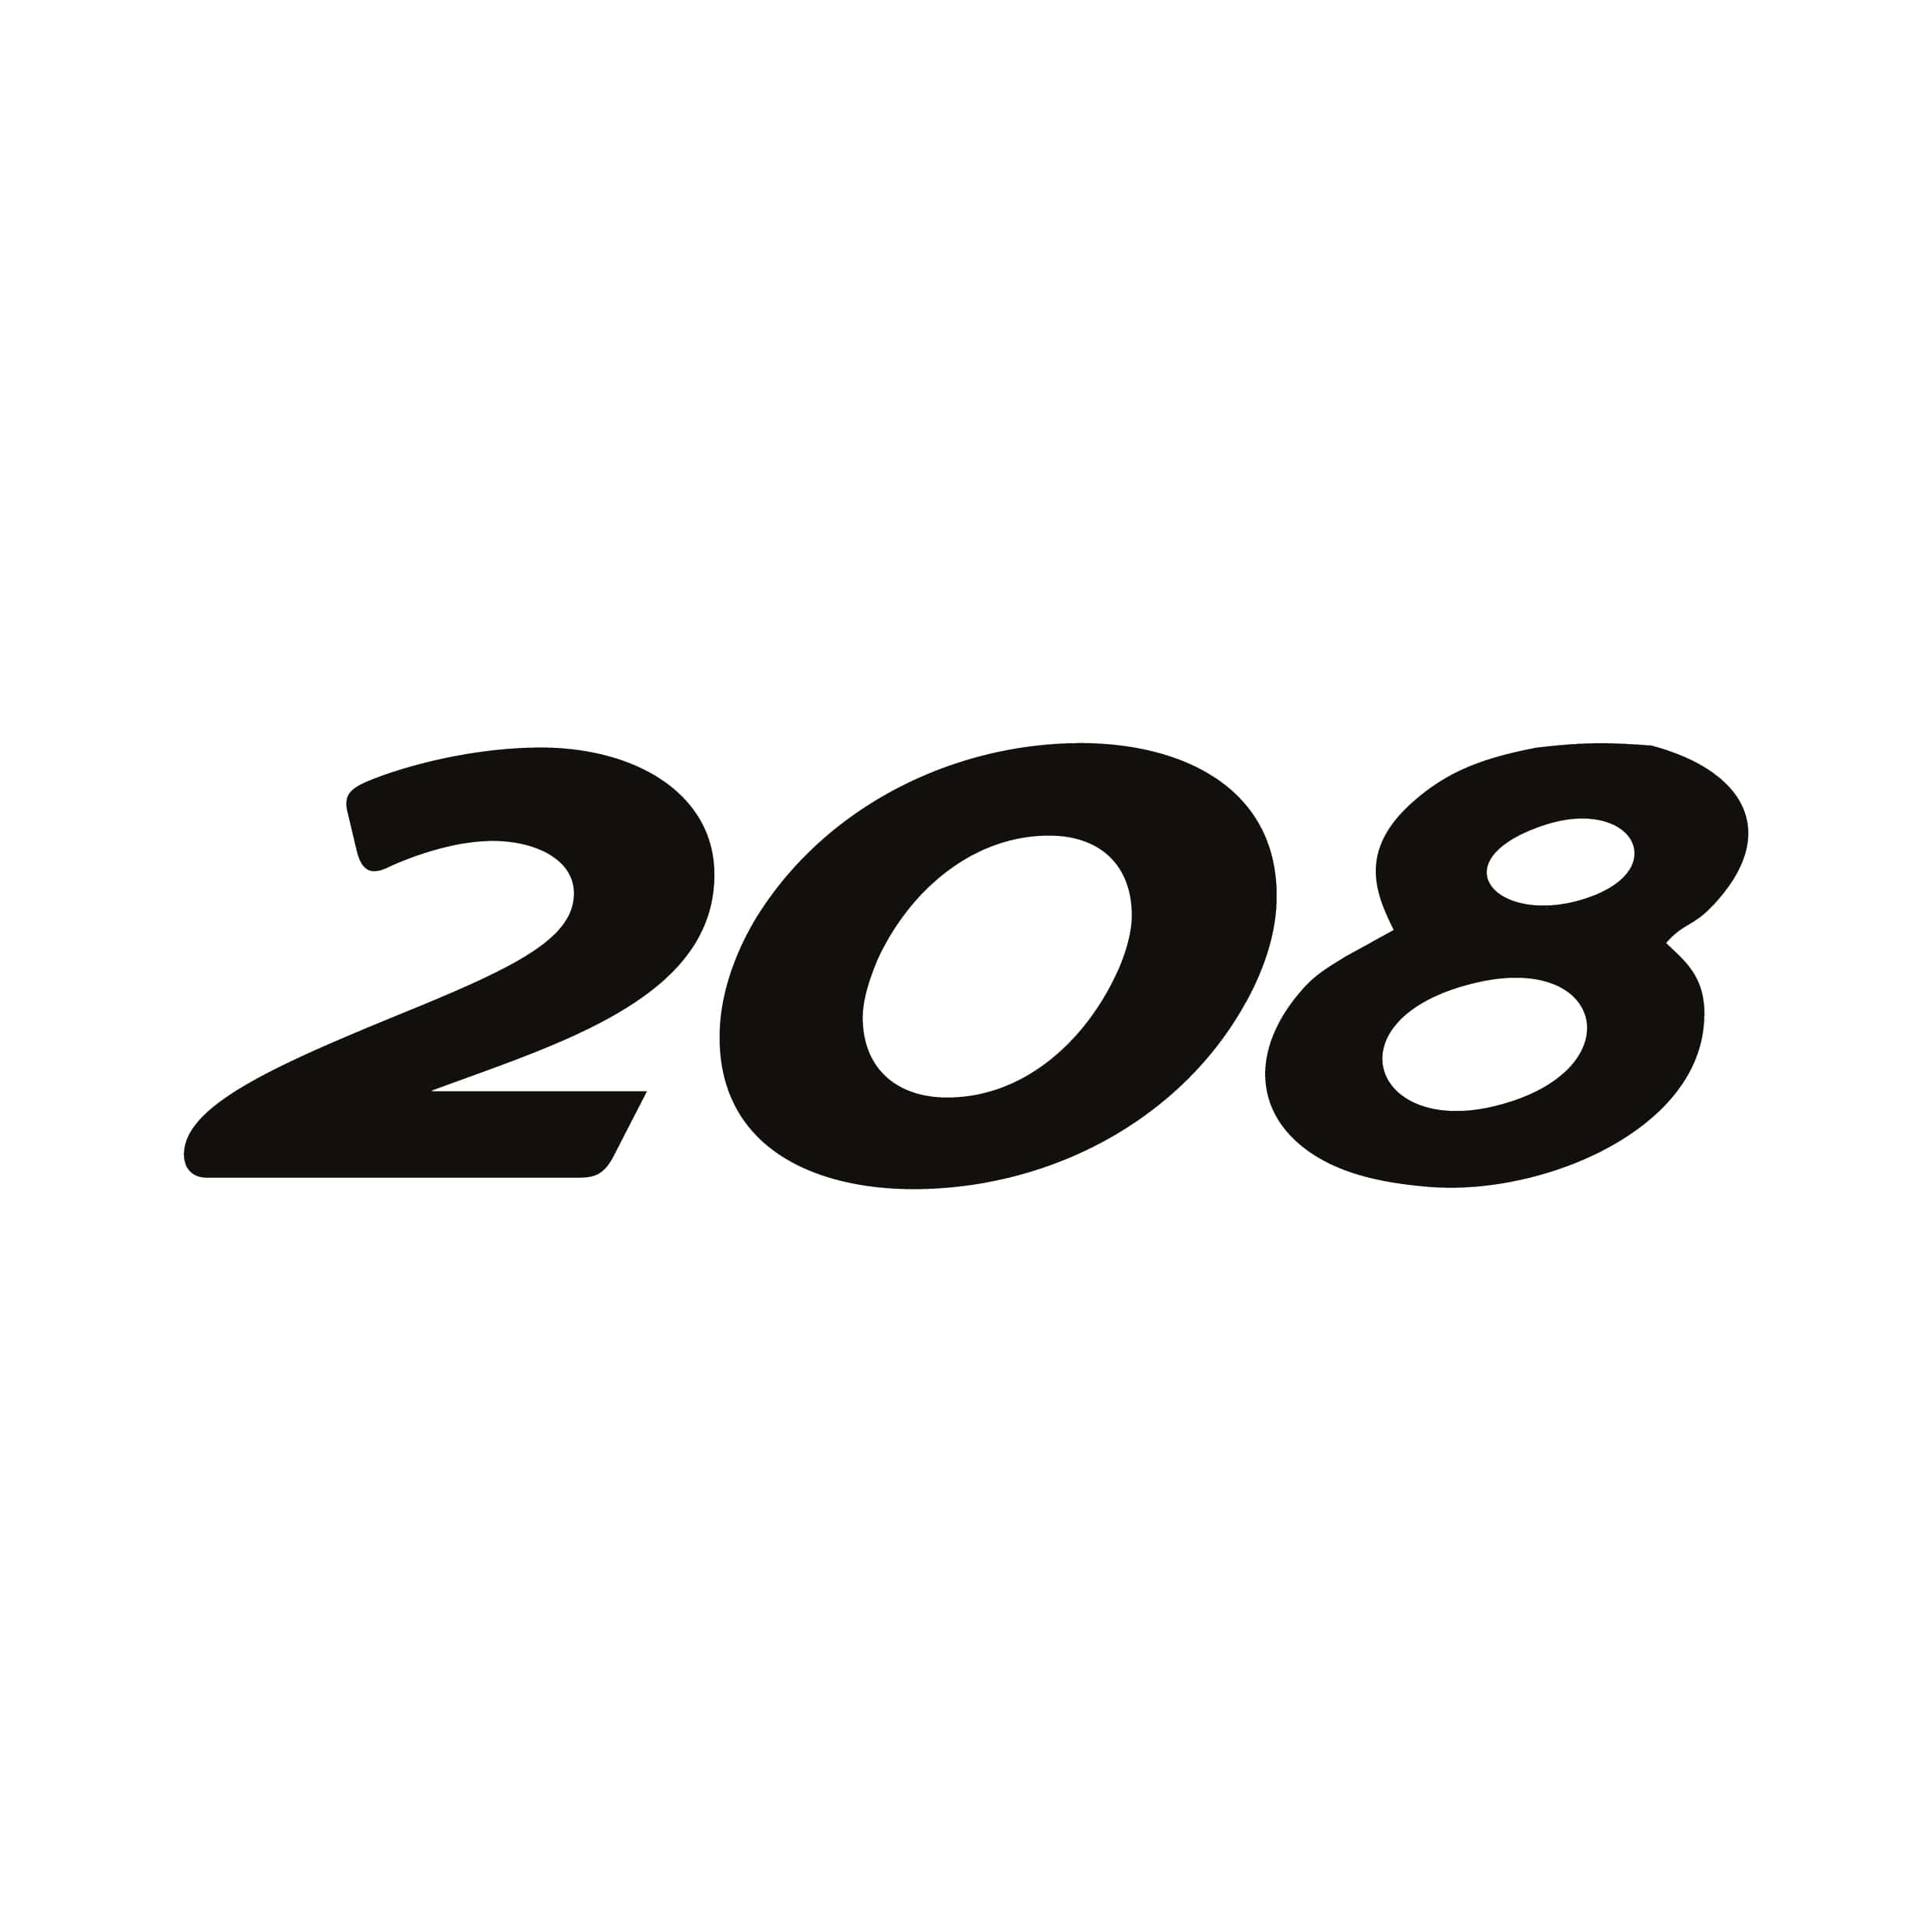 stickers-peugeot-208-ref35-autocollant-voiture-sticker-auto-autocollants-decals-sponsors-racing-tuning-sport-logo-min